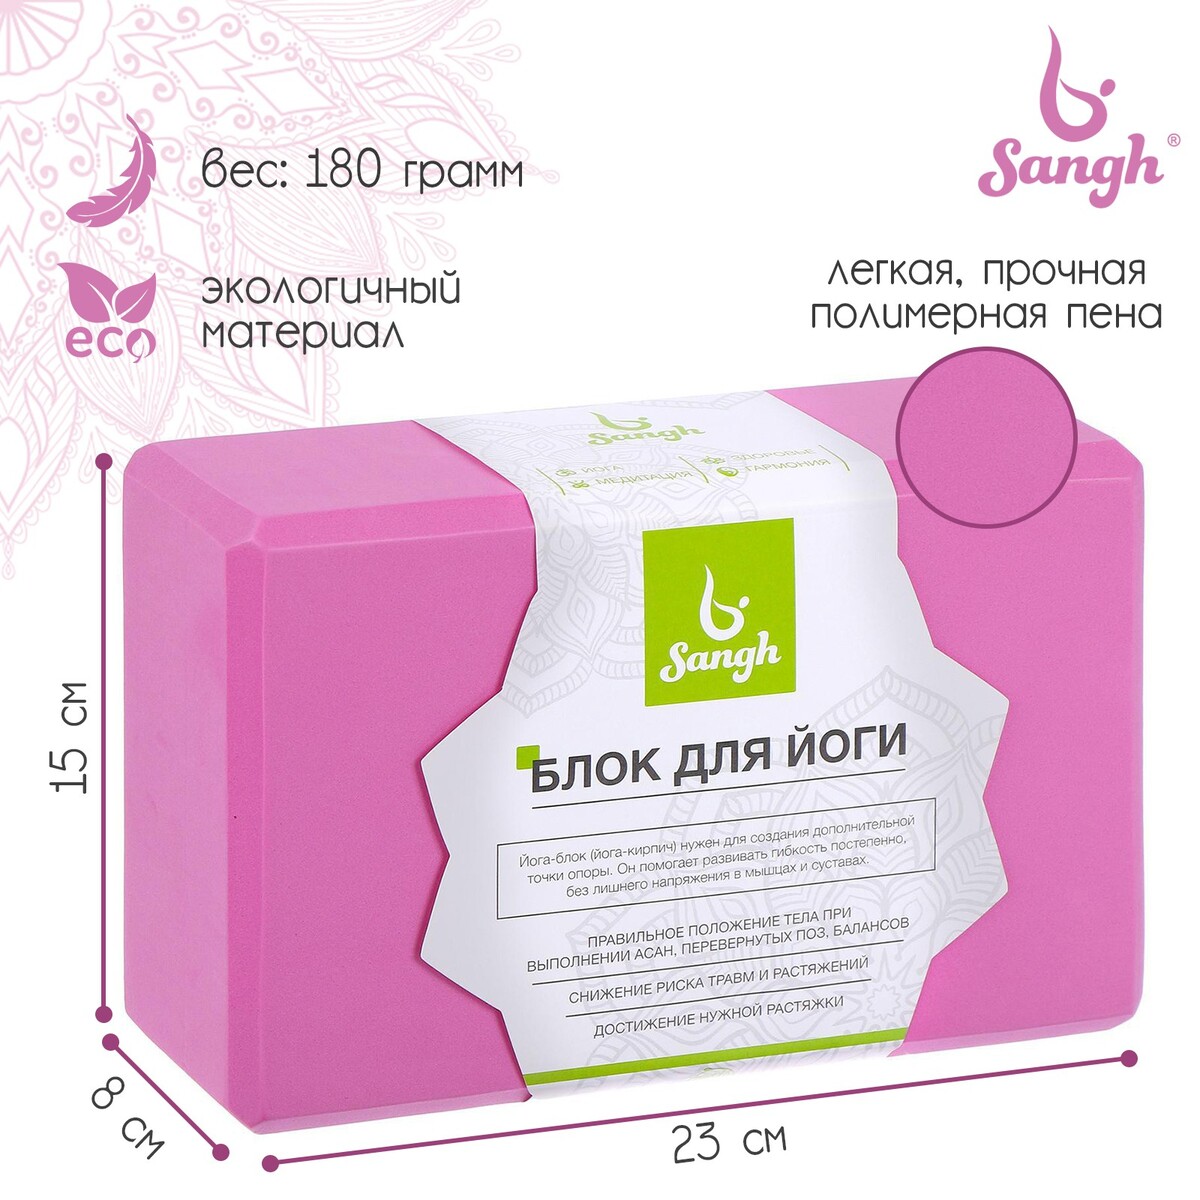 Блок для йоги sangh, 23х15х8 см, цвет розовый блок для йоги airex eco cork block aa yogaecocb